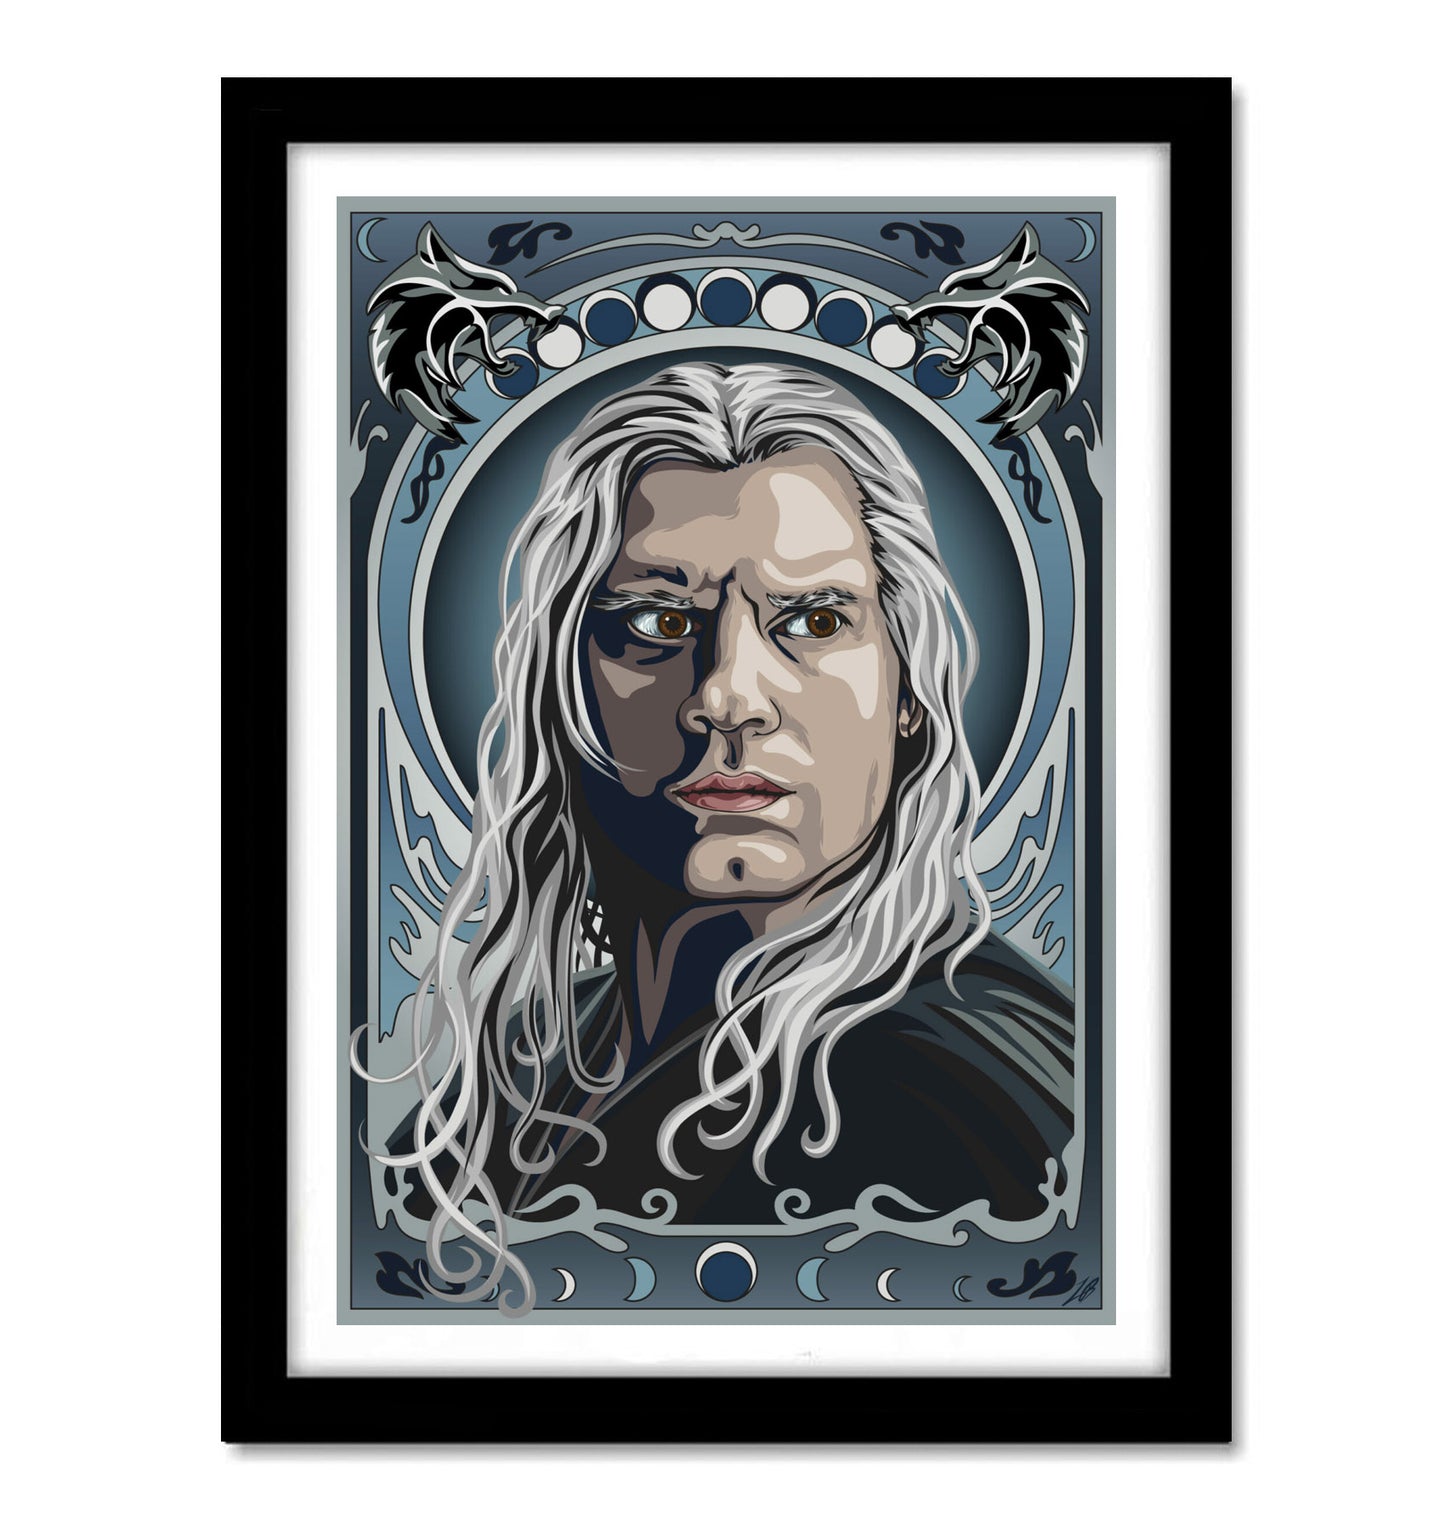 Geralt of Rivia-The Witcher Series Artwork